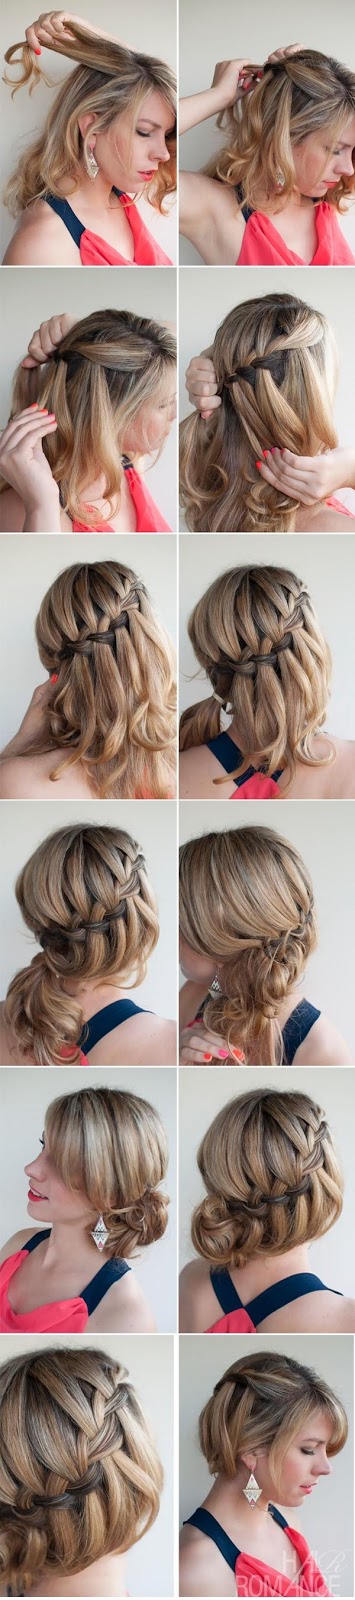 DIY waterfall braided bun hairstyle over